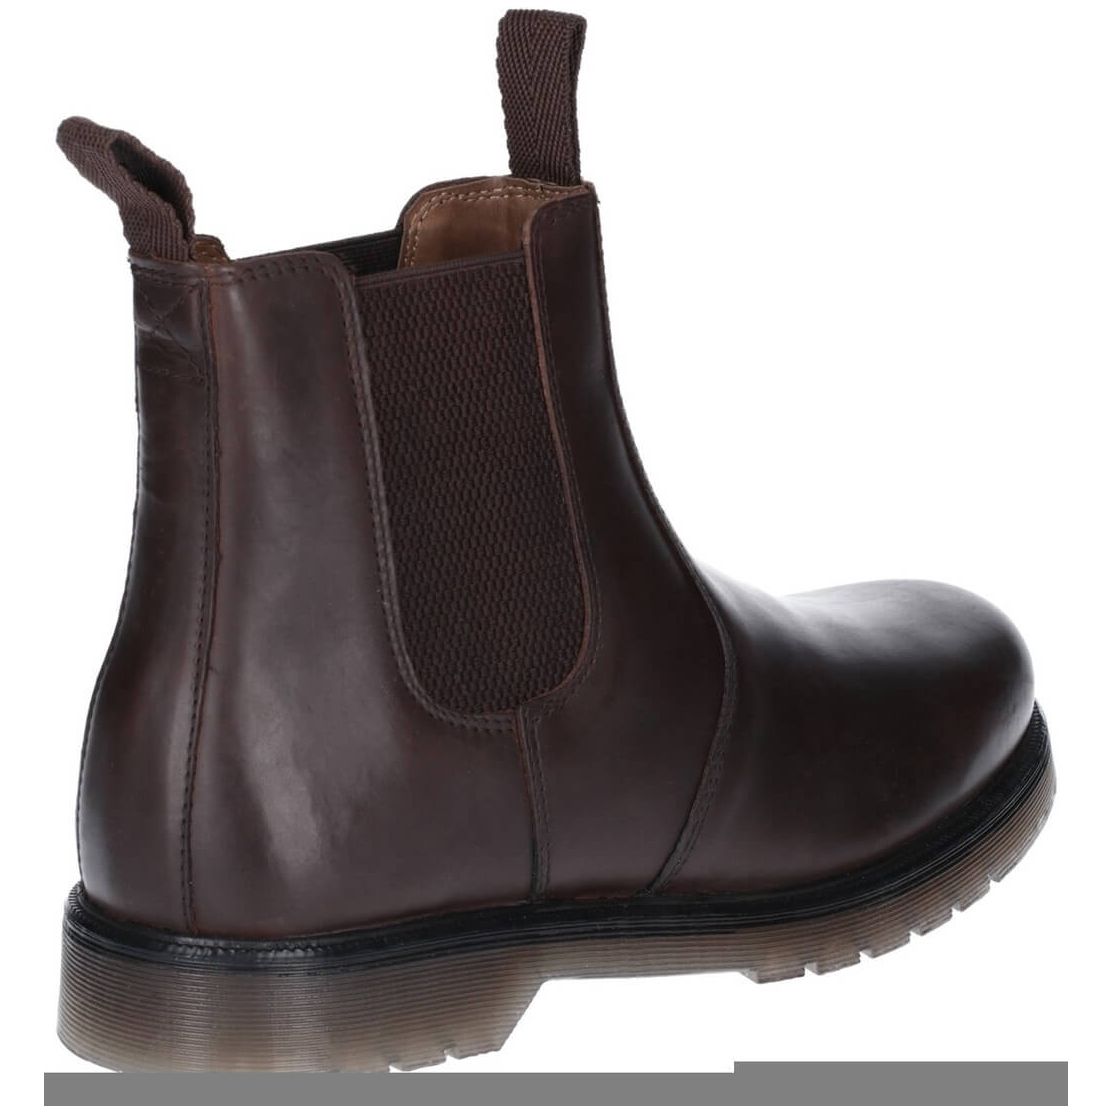 Amblers Chelmsford Dealer Boots Womens - workweargurus.com